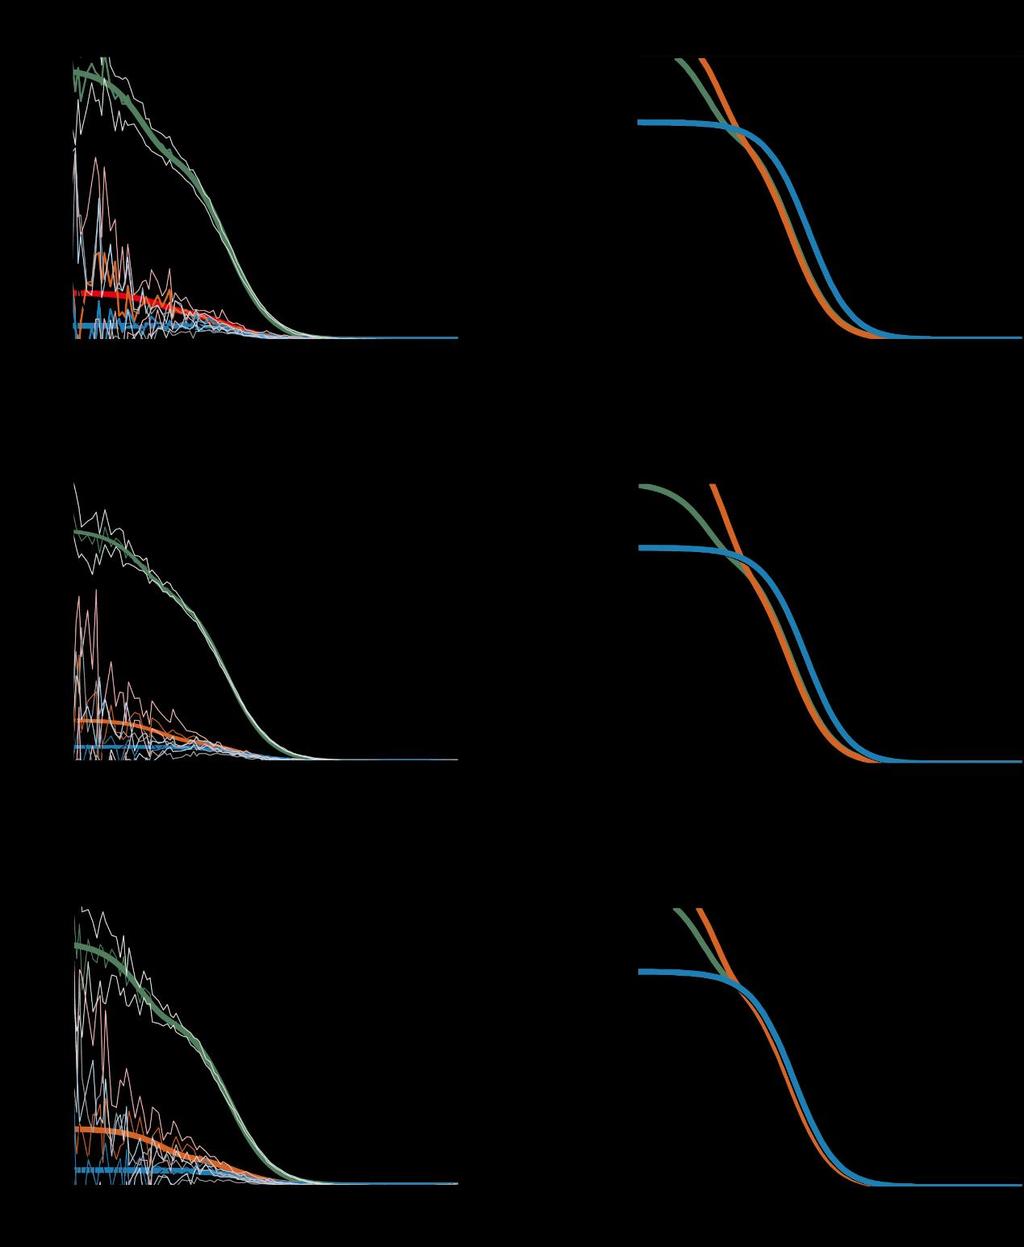 Figure S5. DPC concentration ratio gradient of double-labeled Ykt6 (green: AC-d, red: AC-a, black: CC- da, blue: CC-ad).